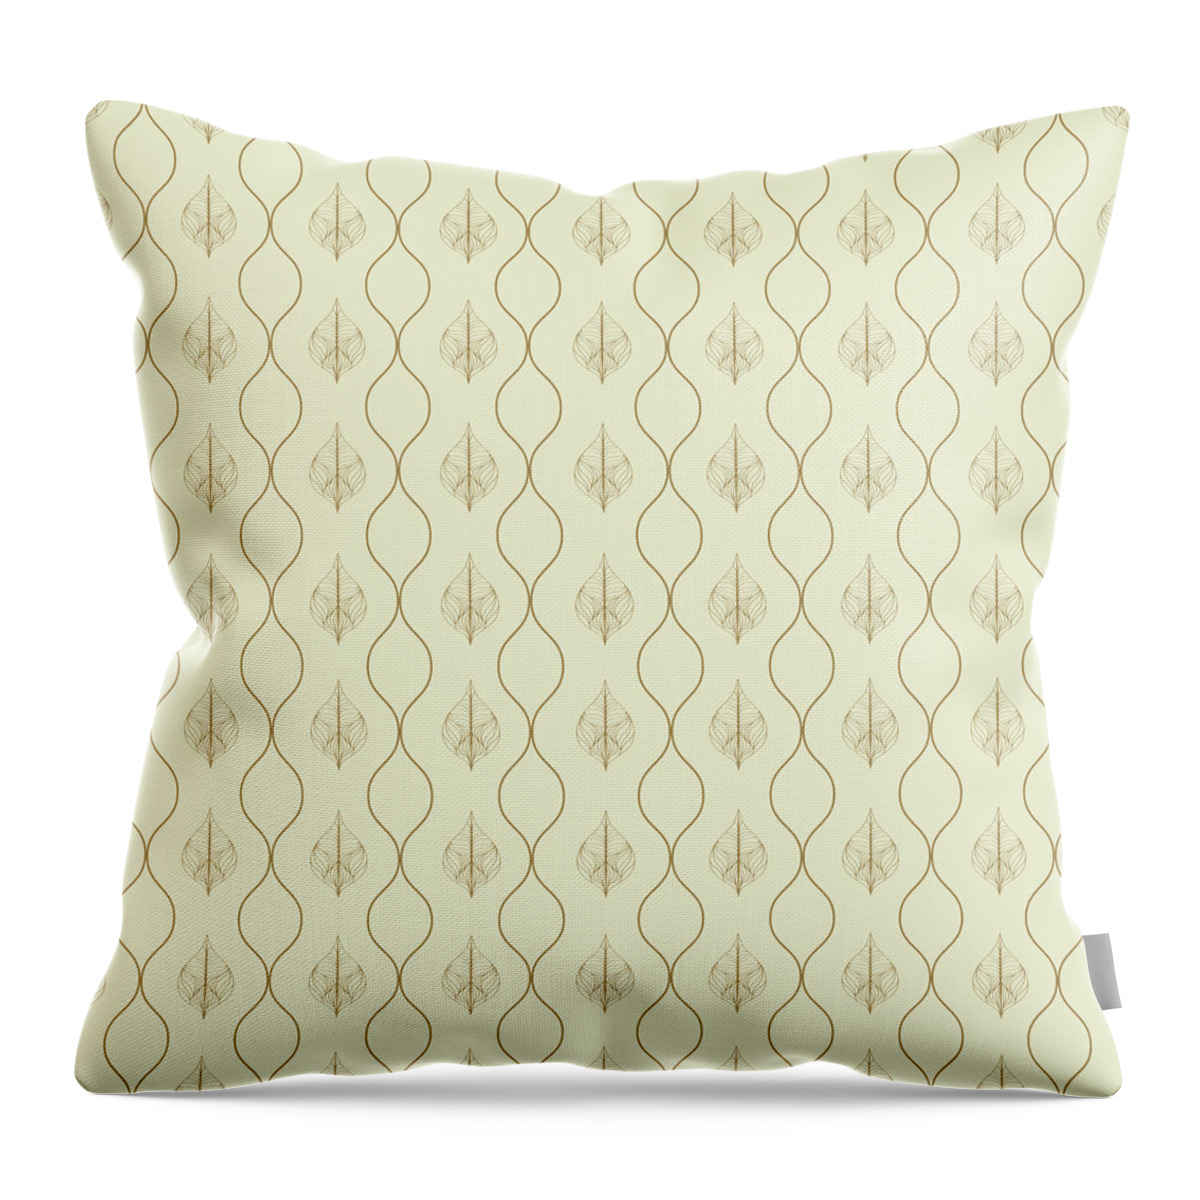 Pattern Throw Pillow featuring the digital art Off White - Retro Wavy Leaf Pattern by Studio Grafiikka